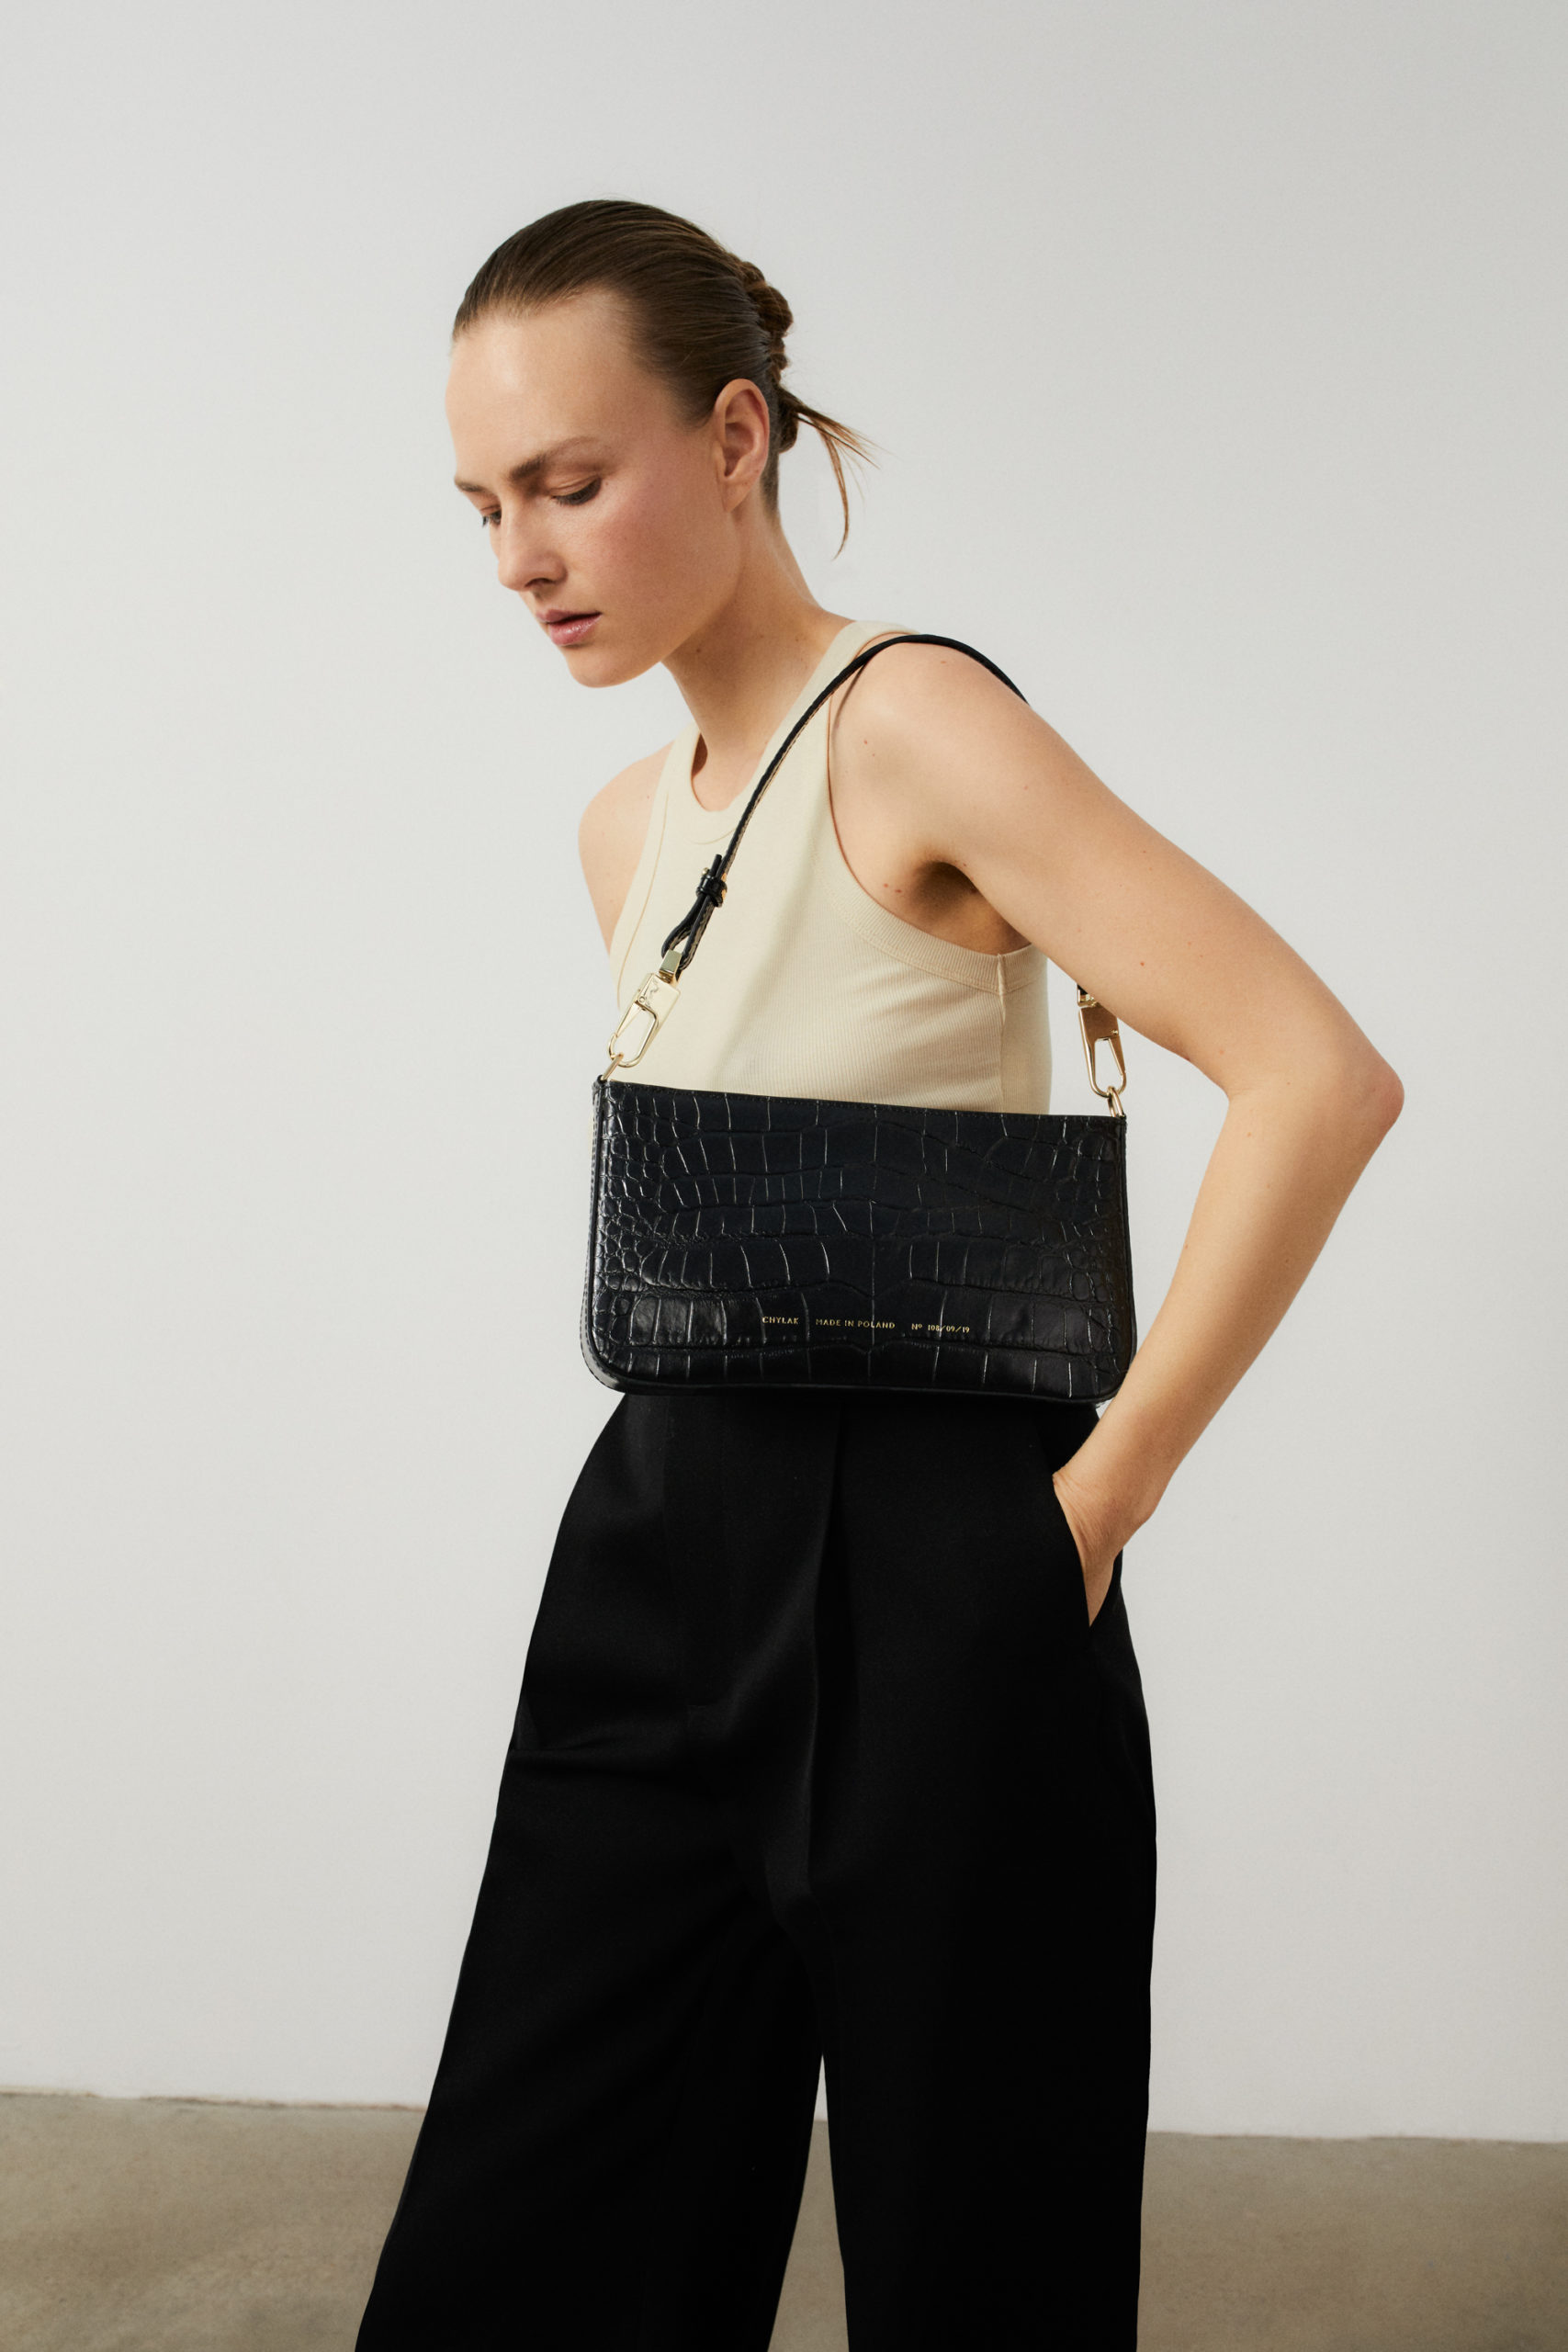 Oxford Cloth Shoulder Bags Large Capacity Underarm Bag Fashion Messenger Bag  | eBay